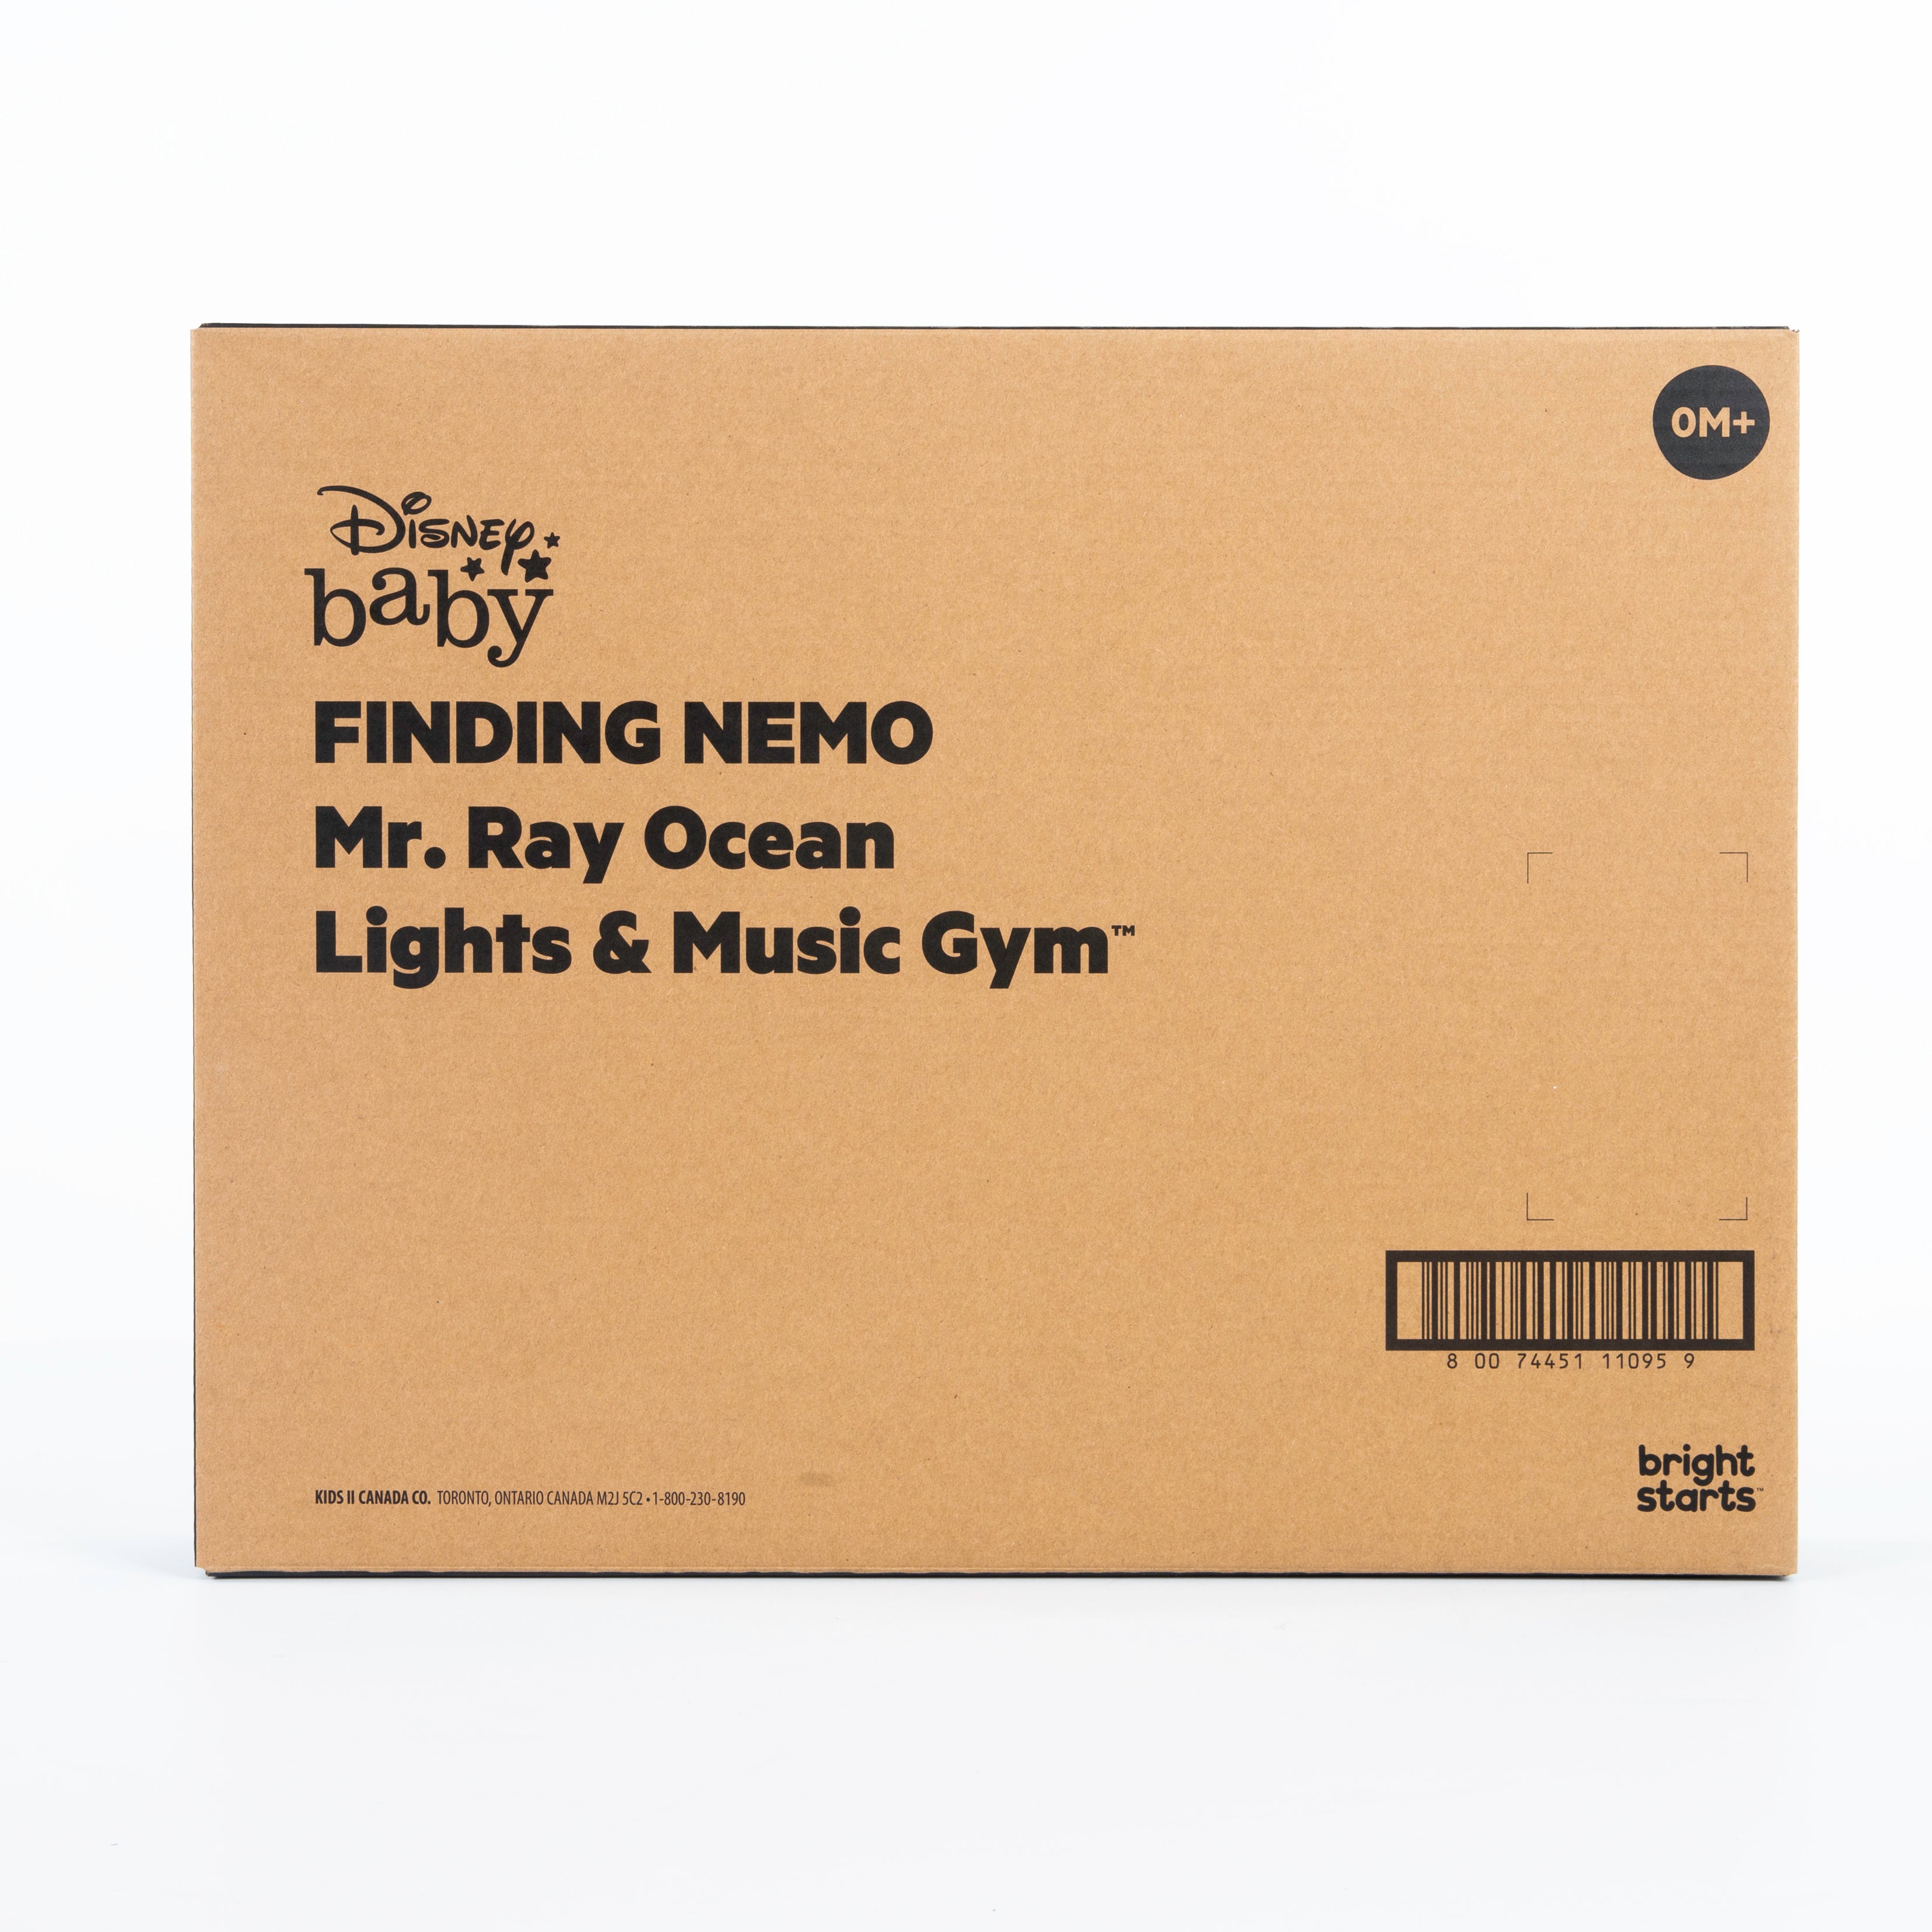 Bright Starts - Finding Nemo Mr. Ray Ocean Lights & Music Gym